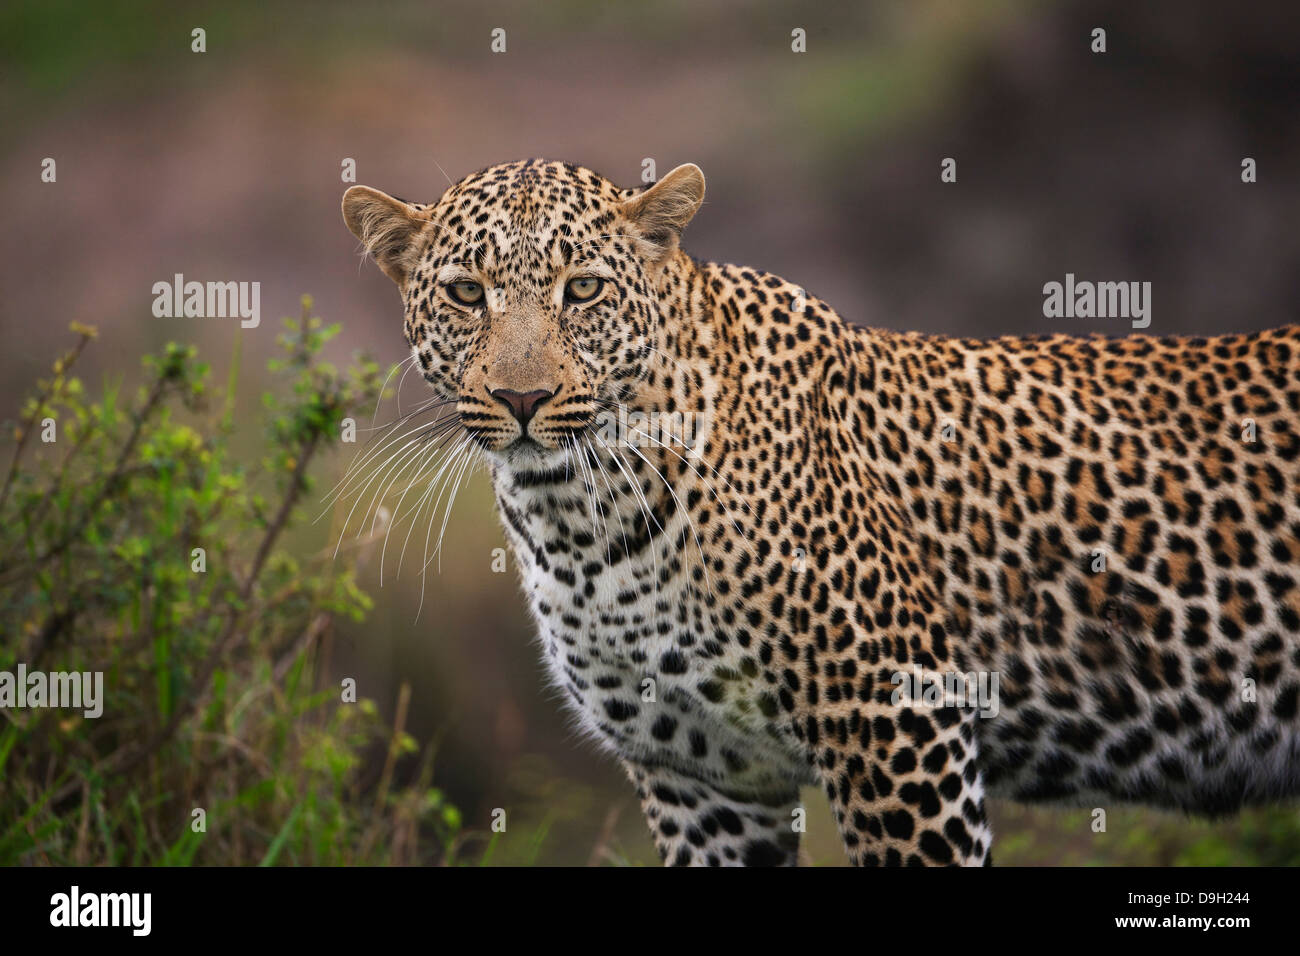 Leopard close-up portrait, Masai Mara, Kenya Stock Photo